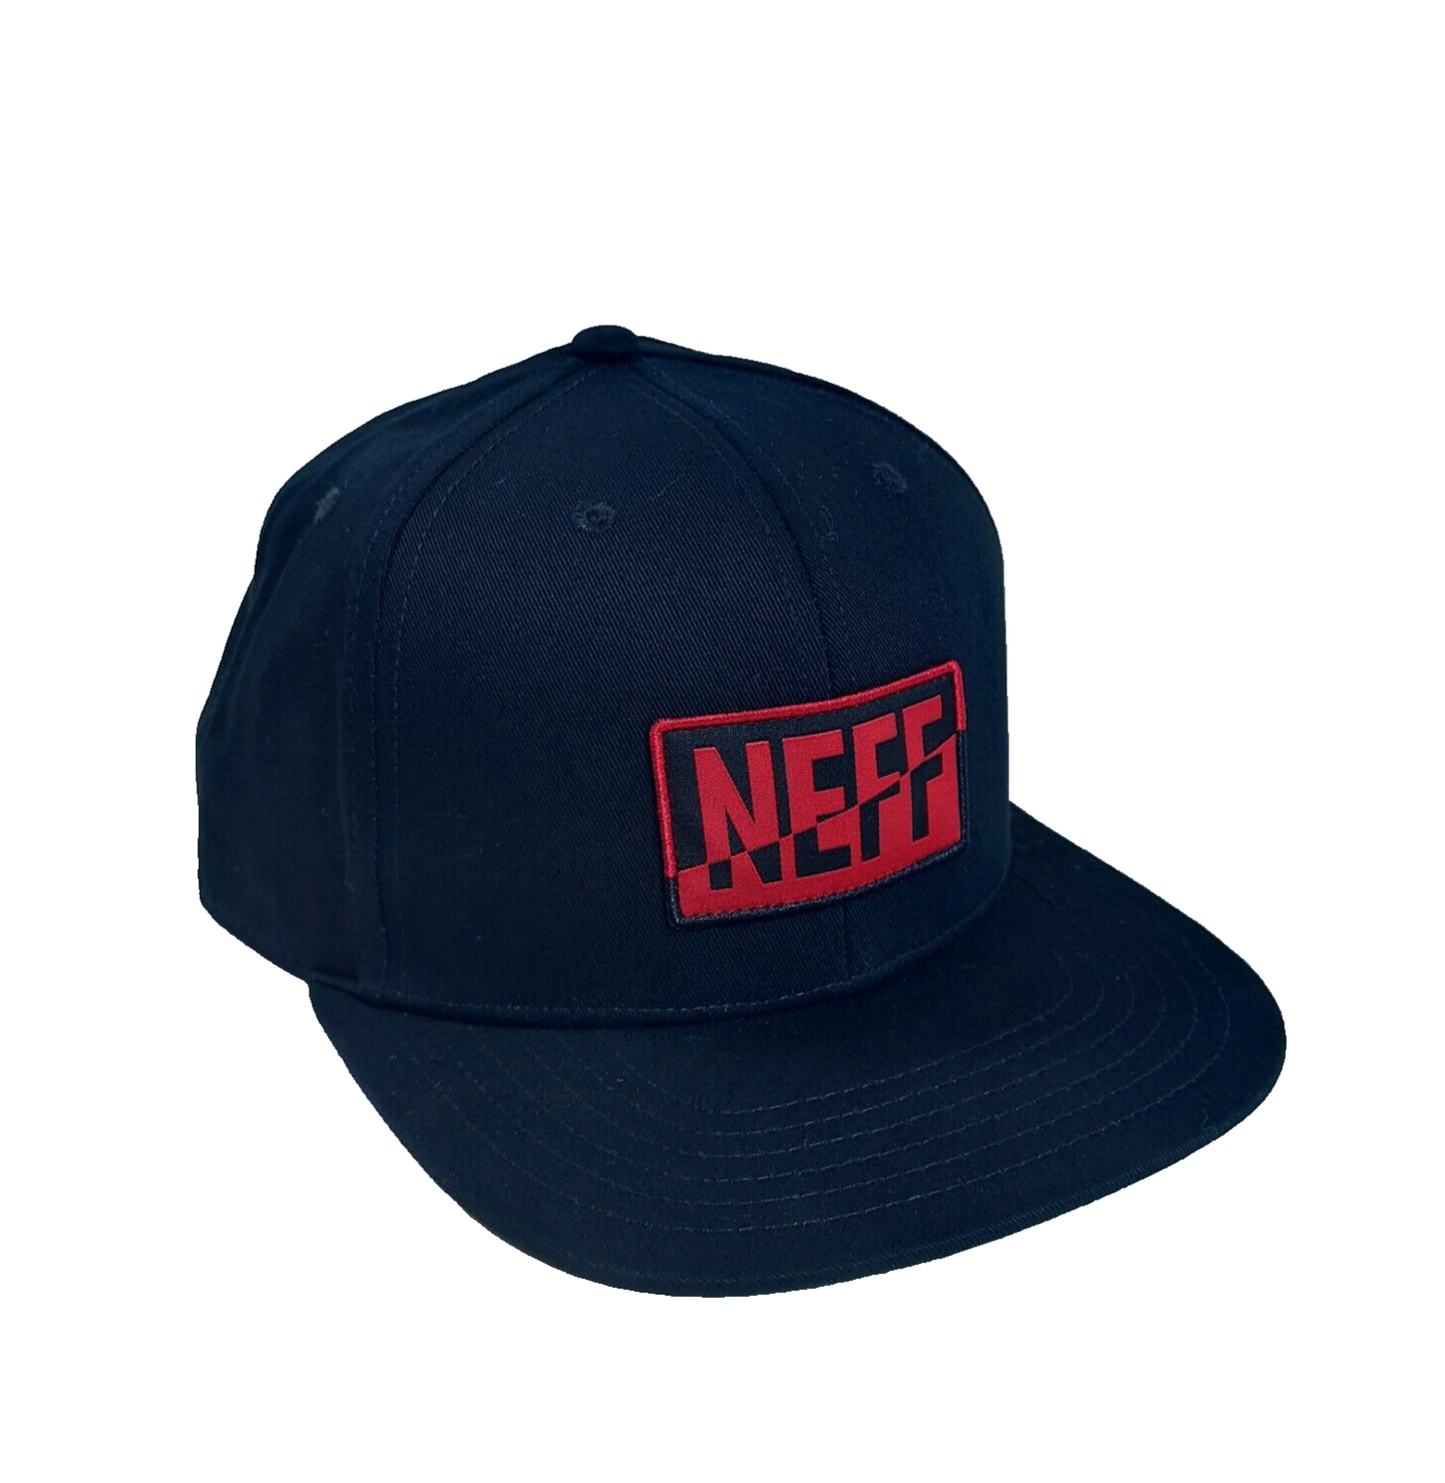 Neff Spliced Black/Red Snapback Brand New